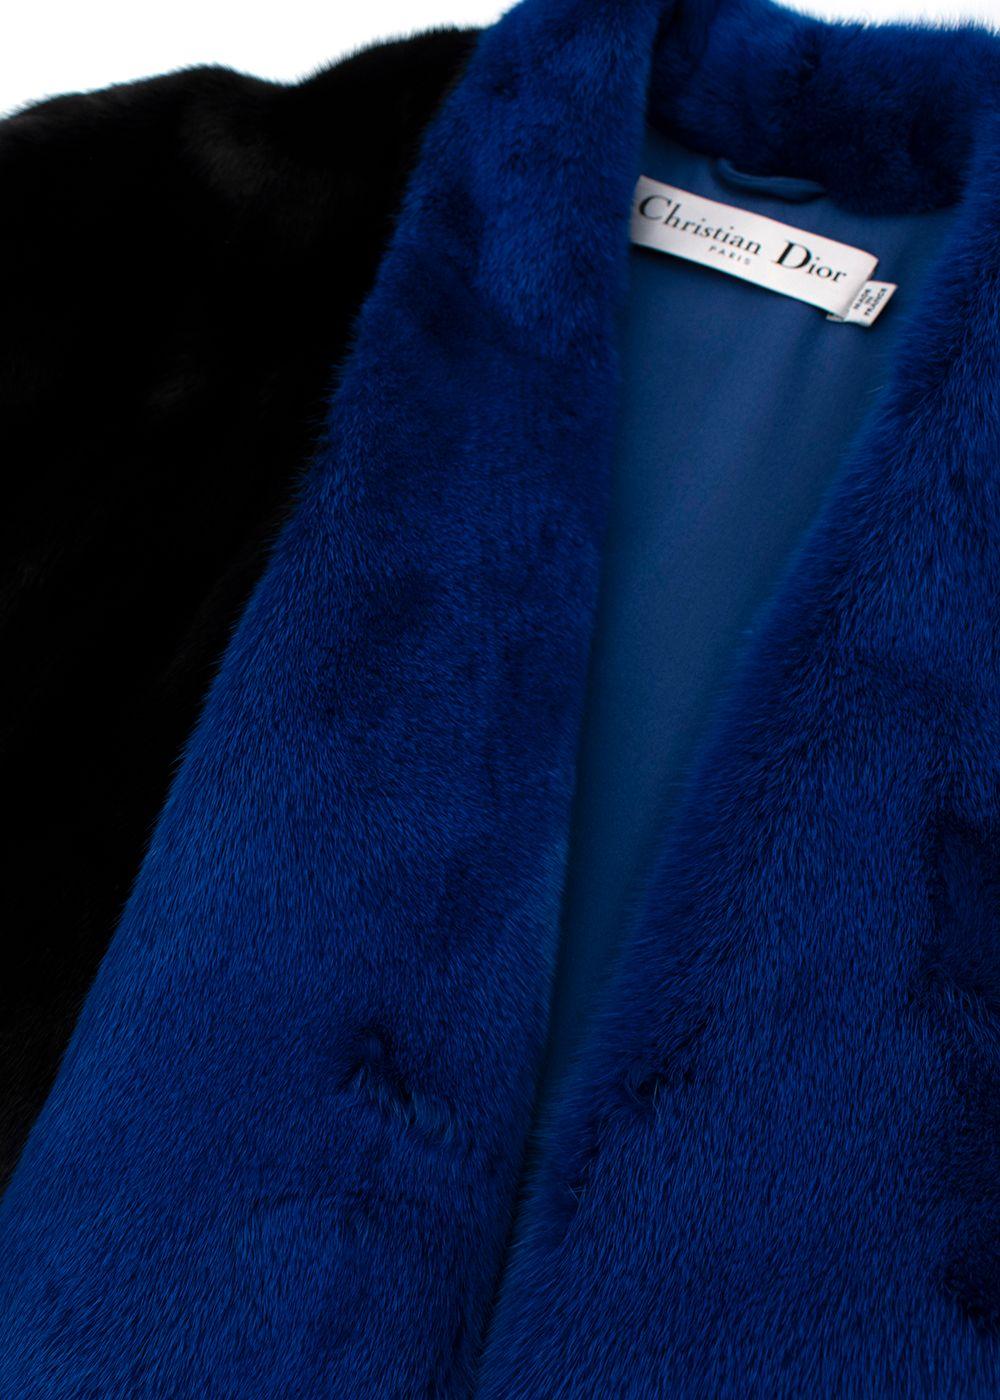 Christian Dior Black & Cobalt Blue Shawl Collar Mink Bolero - US 4 In New Condition For Sale In London, GB